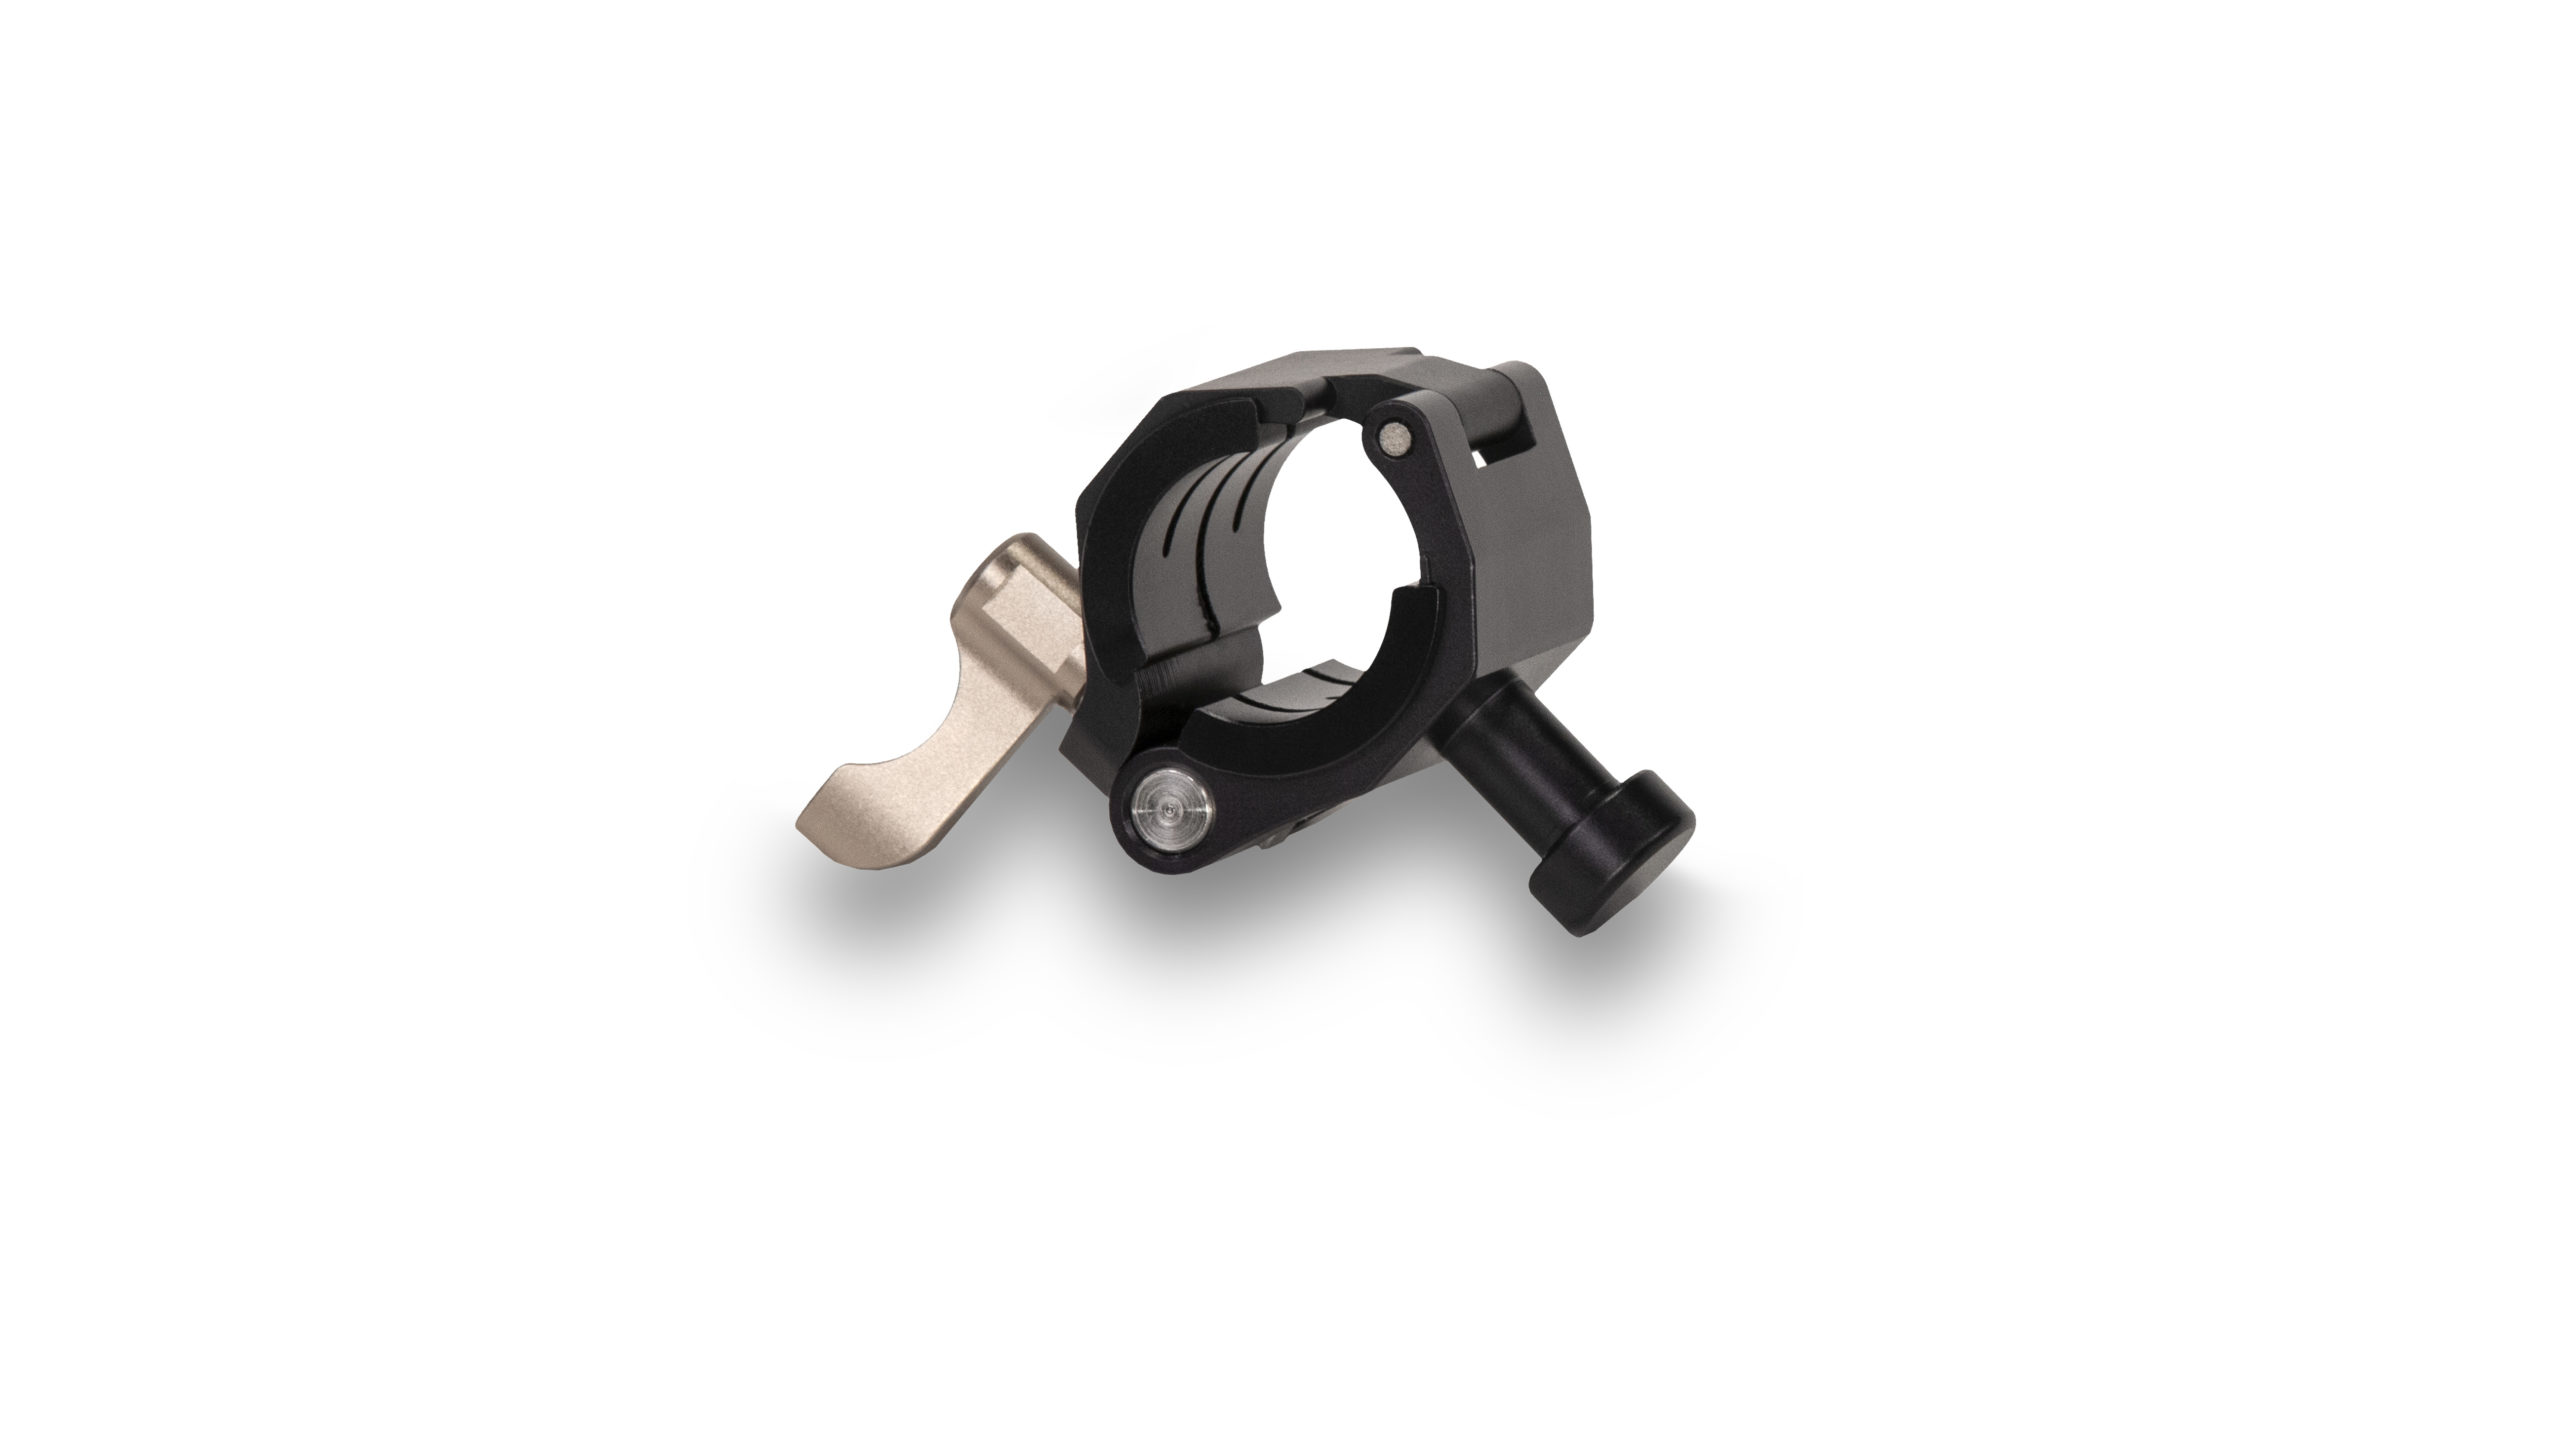 Armorman 3.0 Universal Gimbal Ring Adapter Clamp